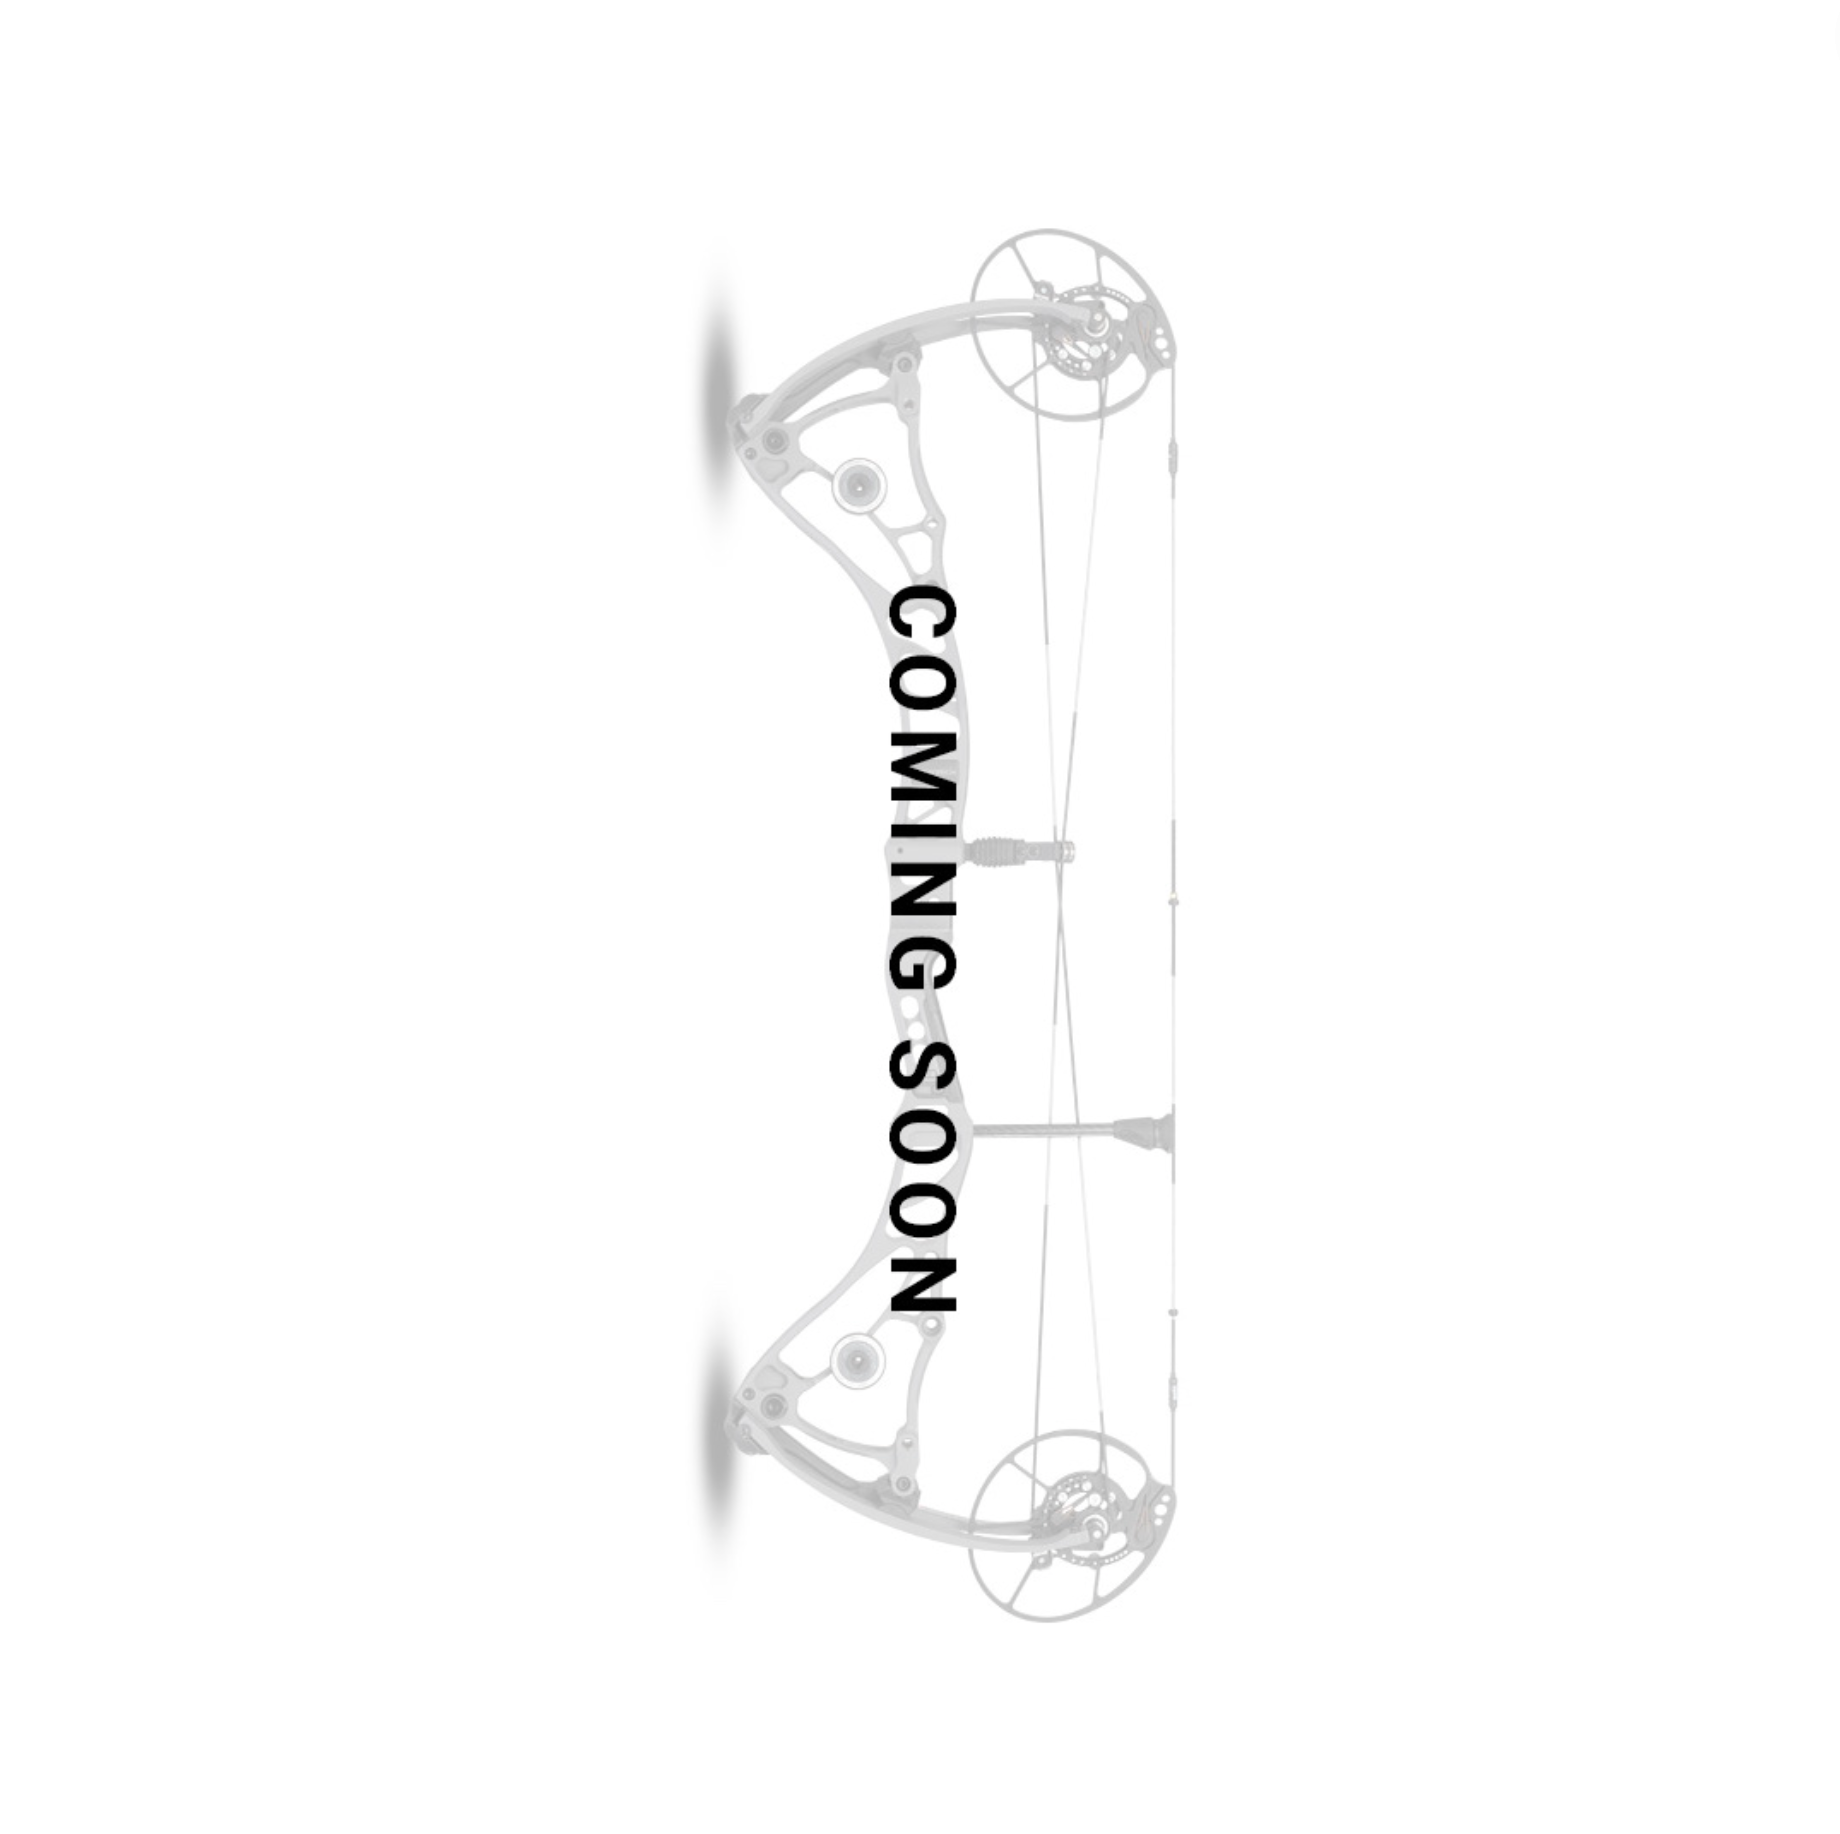 Bowtech Core SR Compound Bow